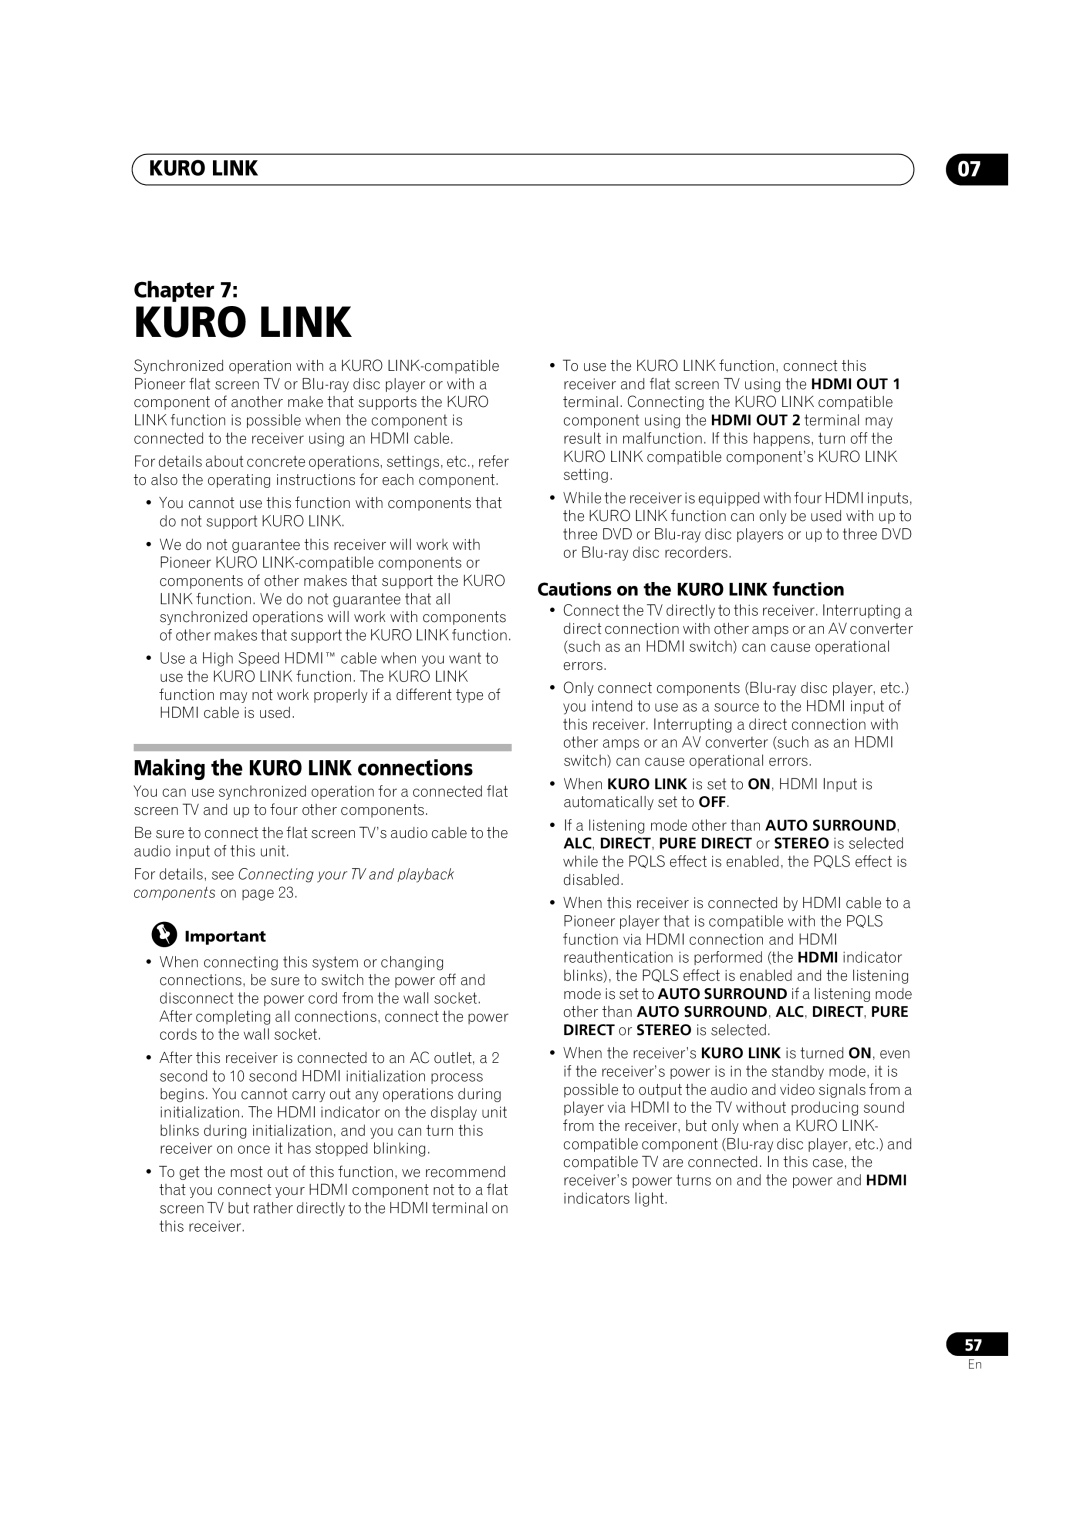 Pioneer VSX-LX52 manual Kuro Link, KURO LINK Chapter, Making the KURO LINK connections, Cautions on the KURO LINK function 